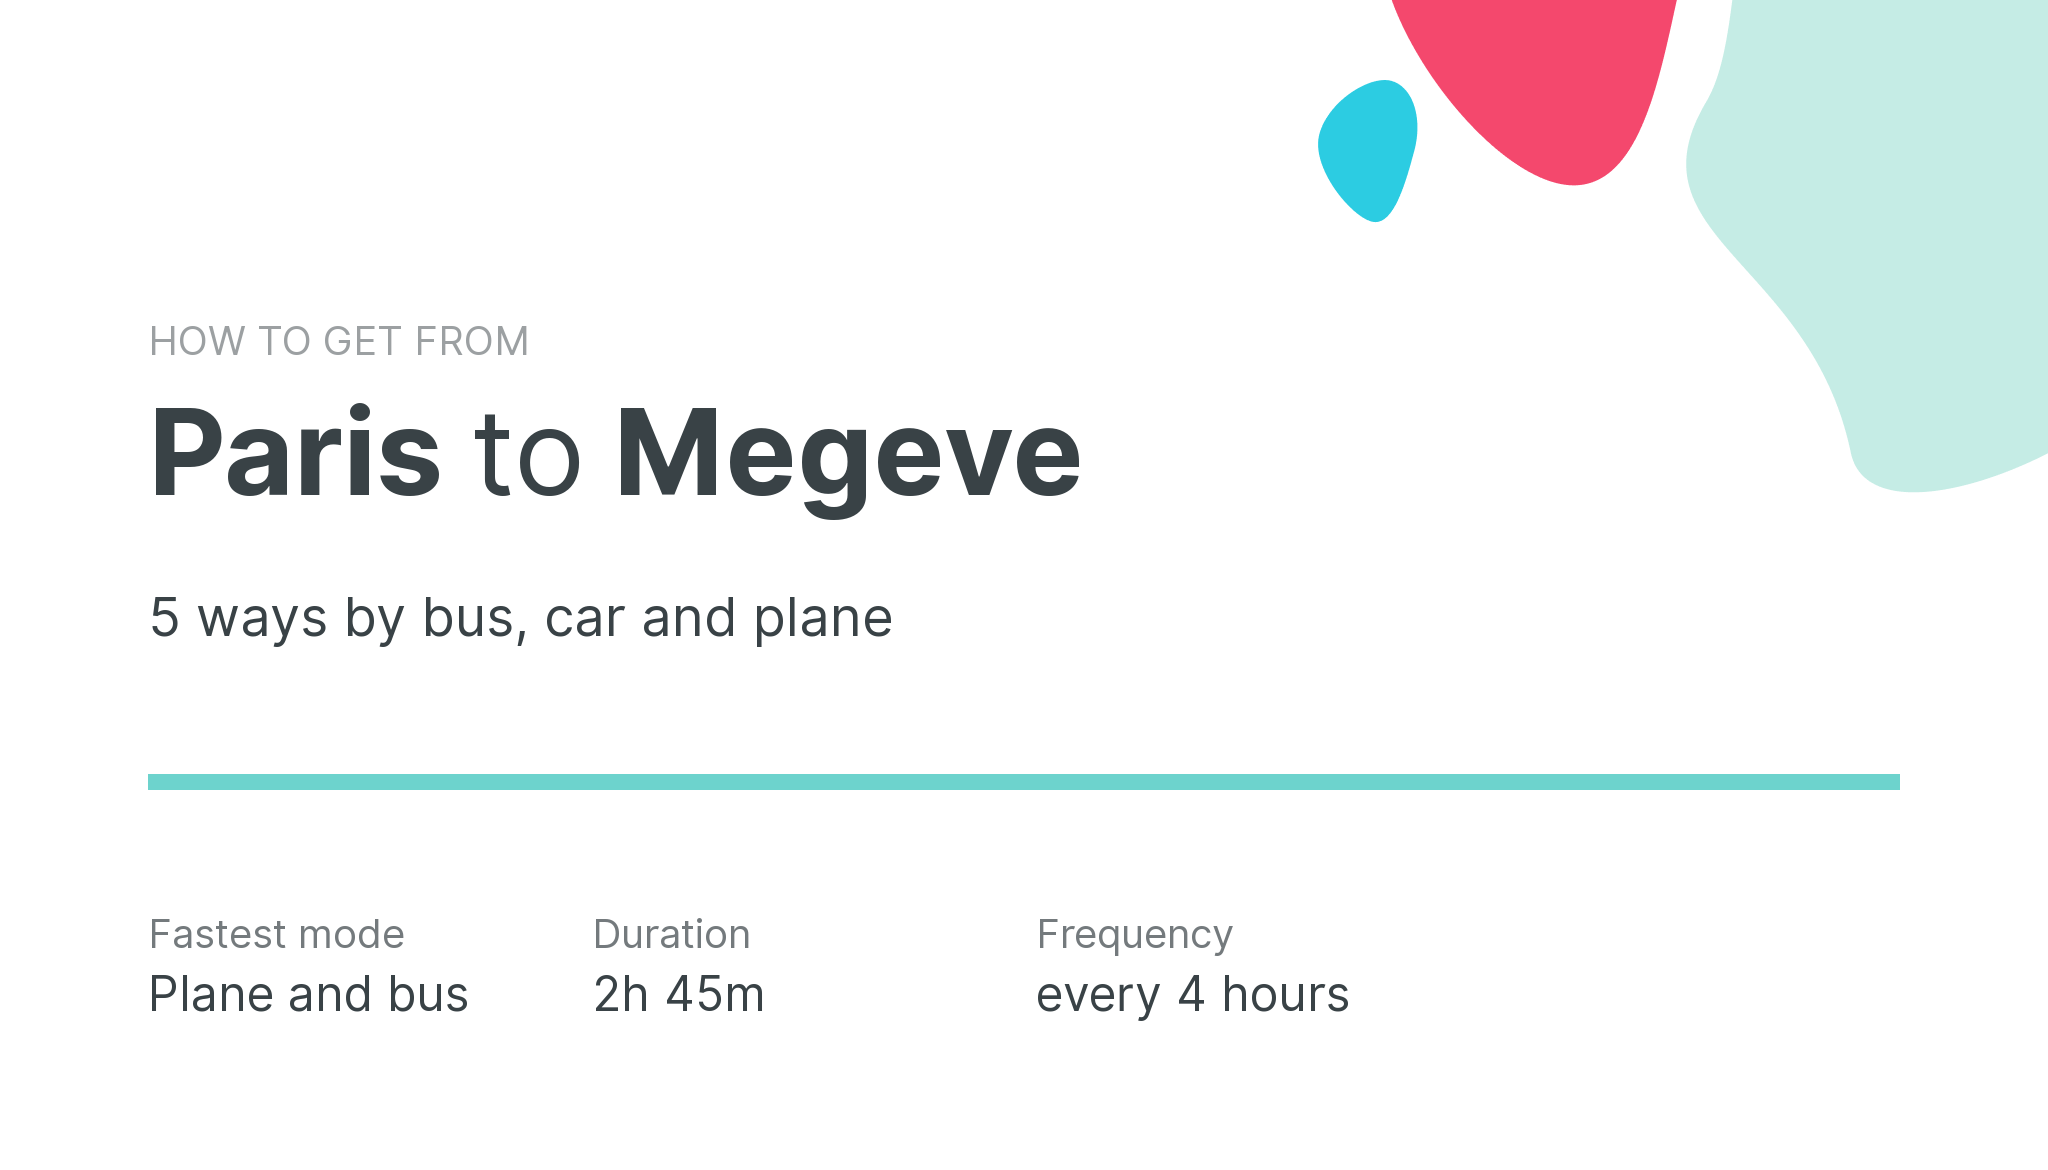 How do I get from Paris to Megeve